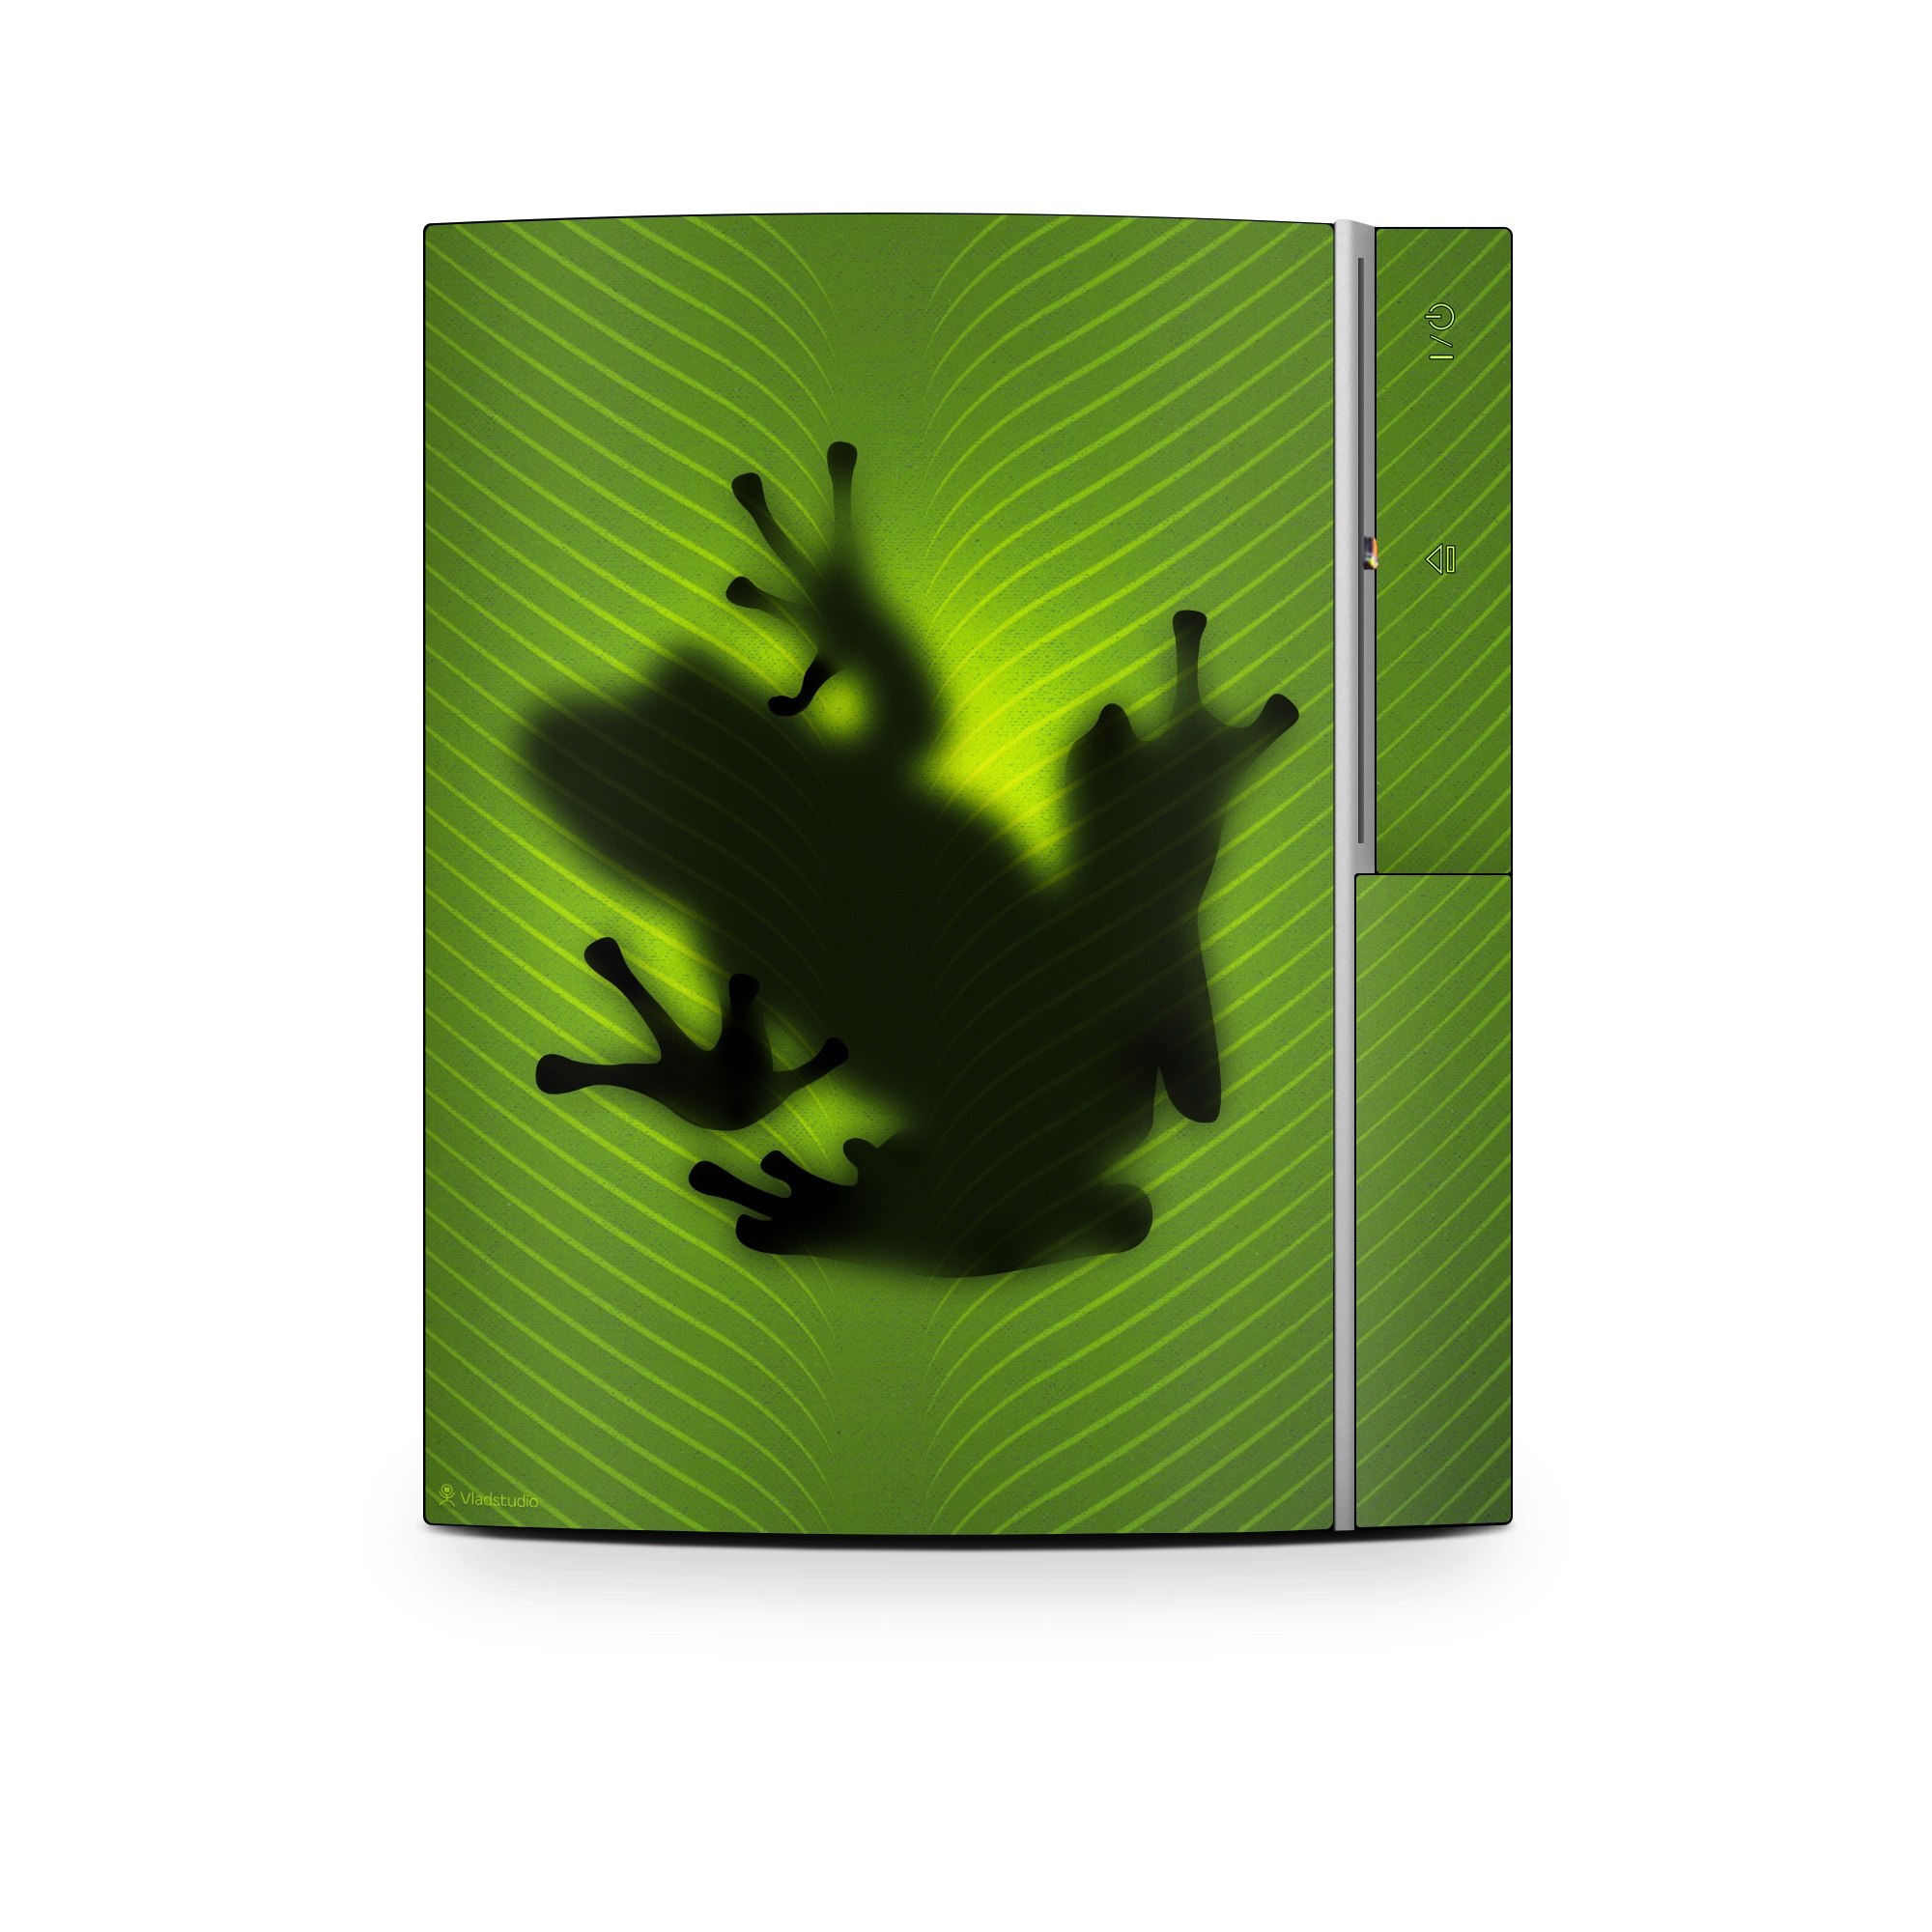 PS3 Skin - Frog (Image 1)